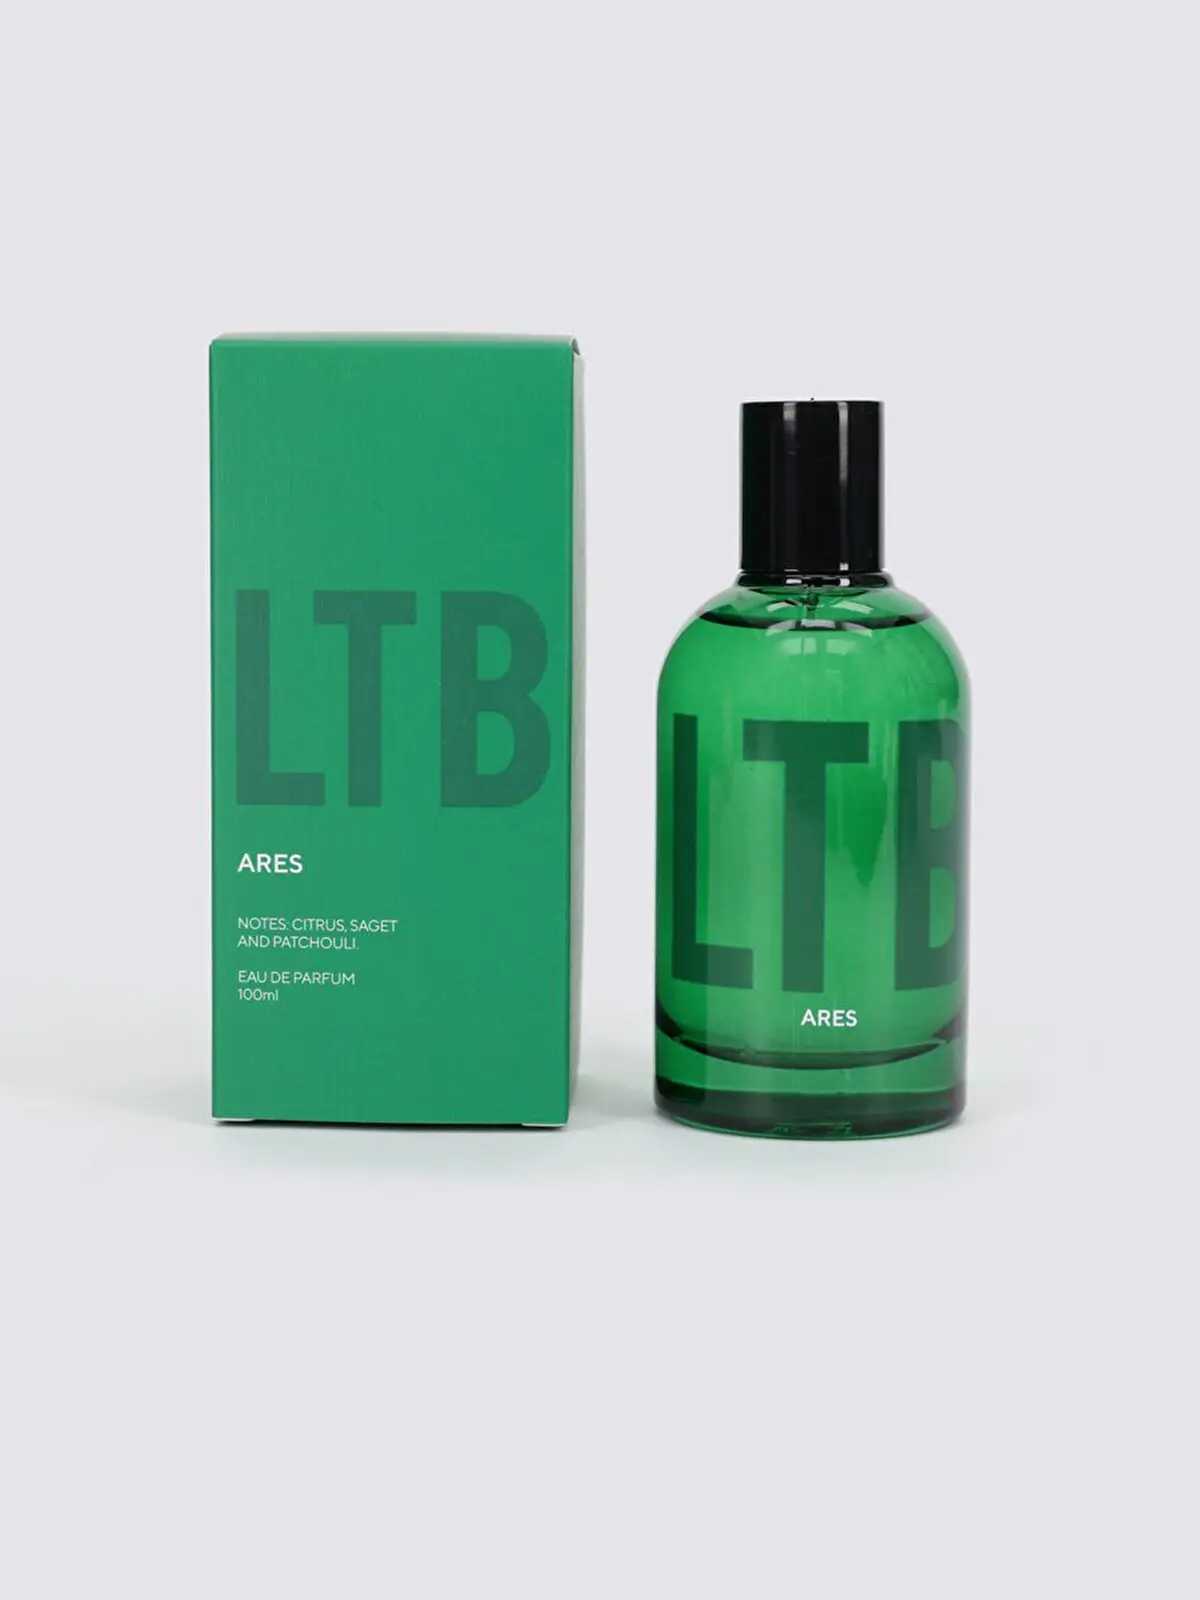 LTB Parfum. 1